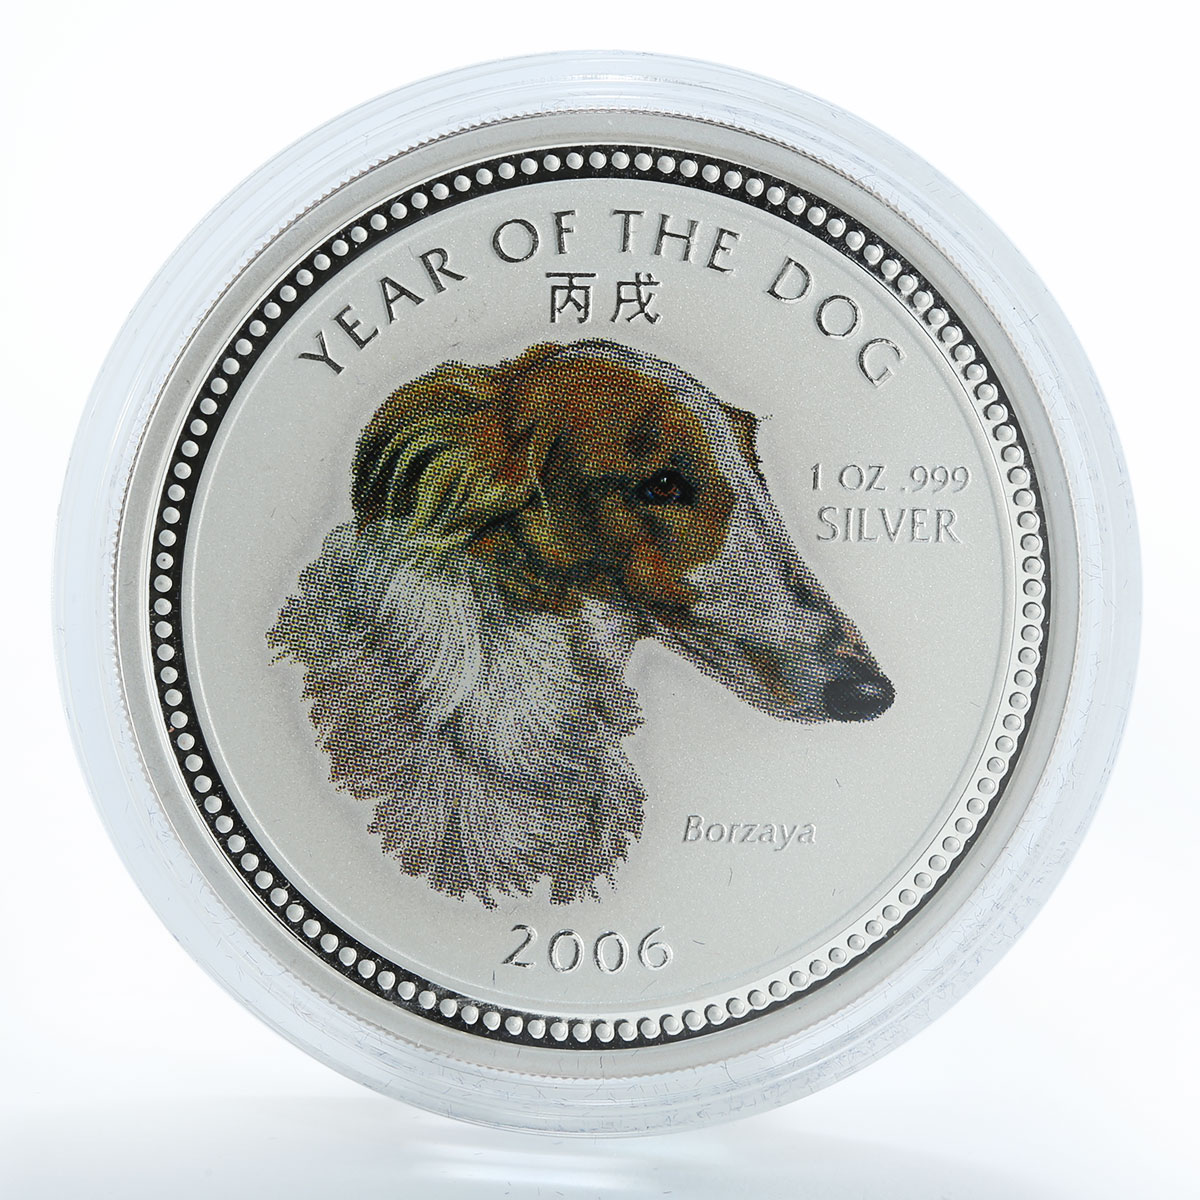 Cambodia 3000 riels Borzaya Year of the Dog Lunar silver 1 oz coin 2006